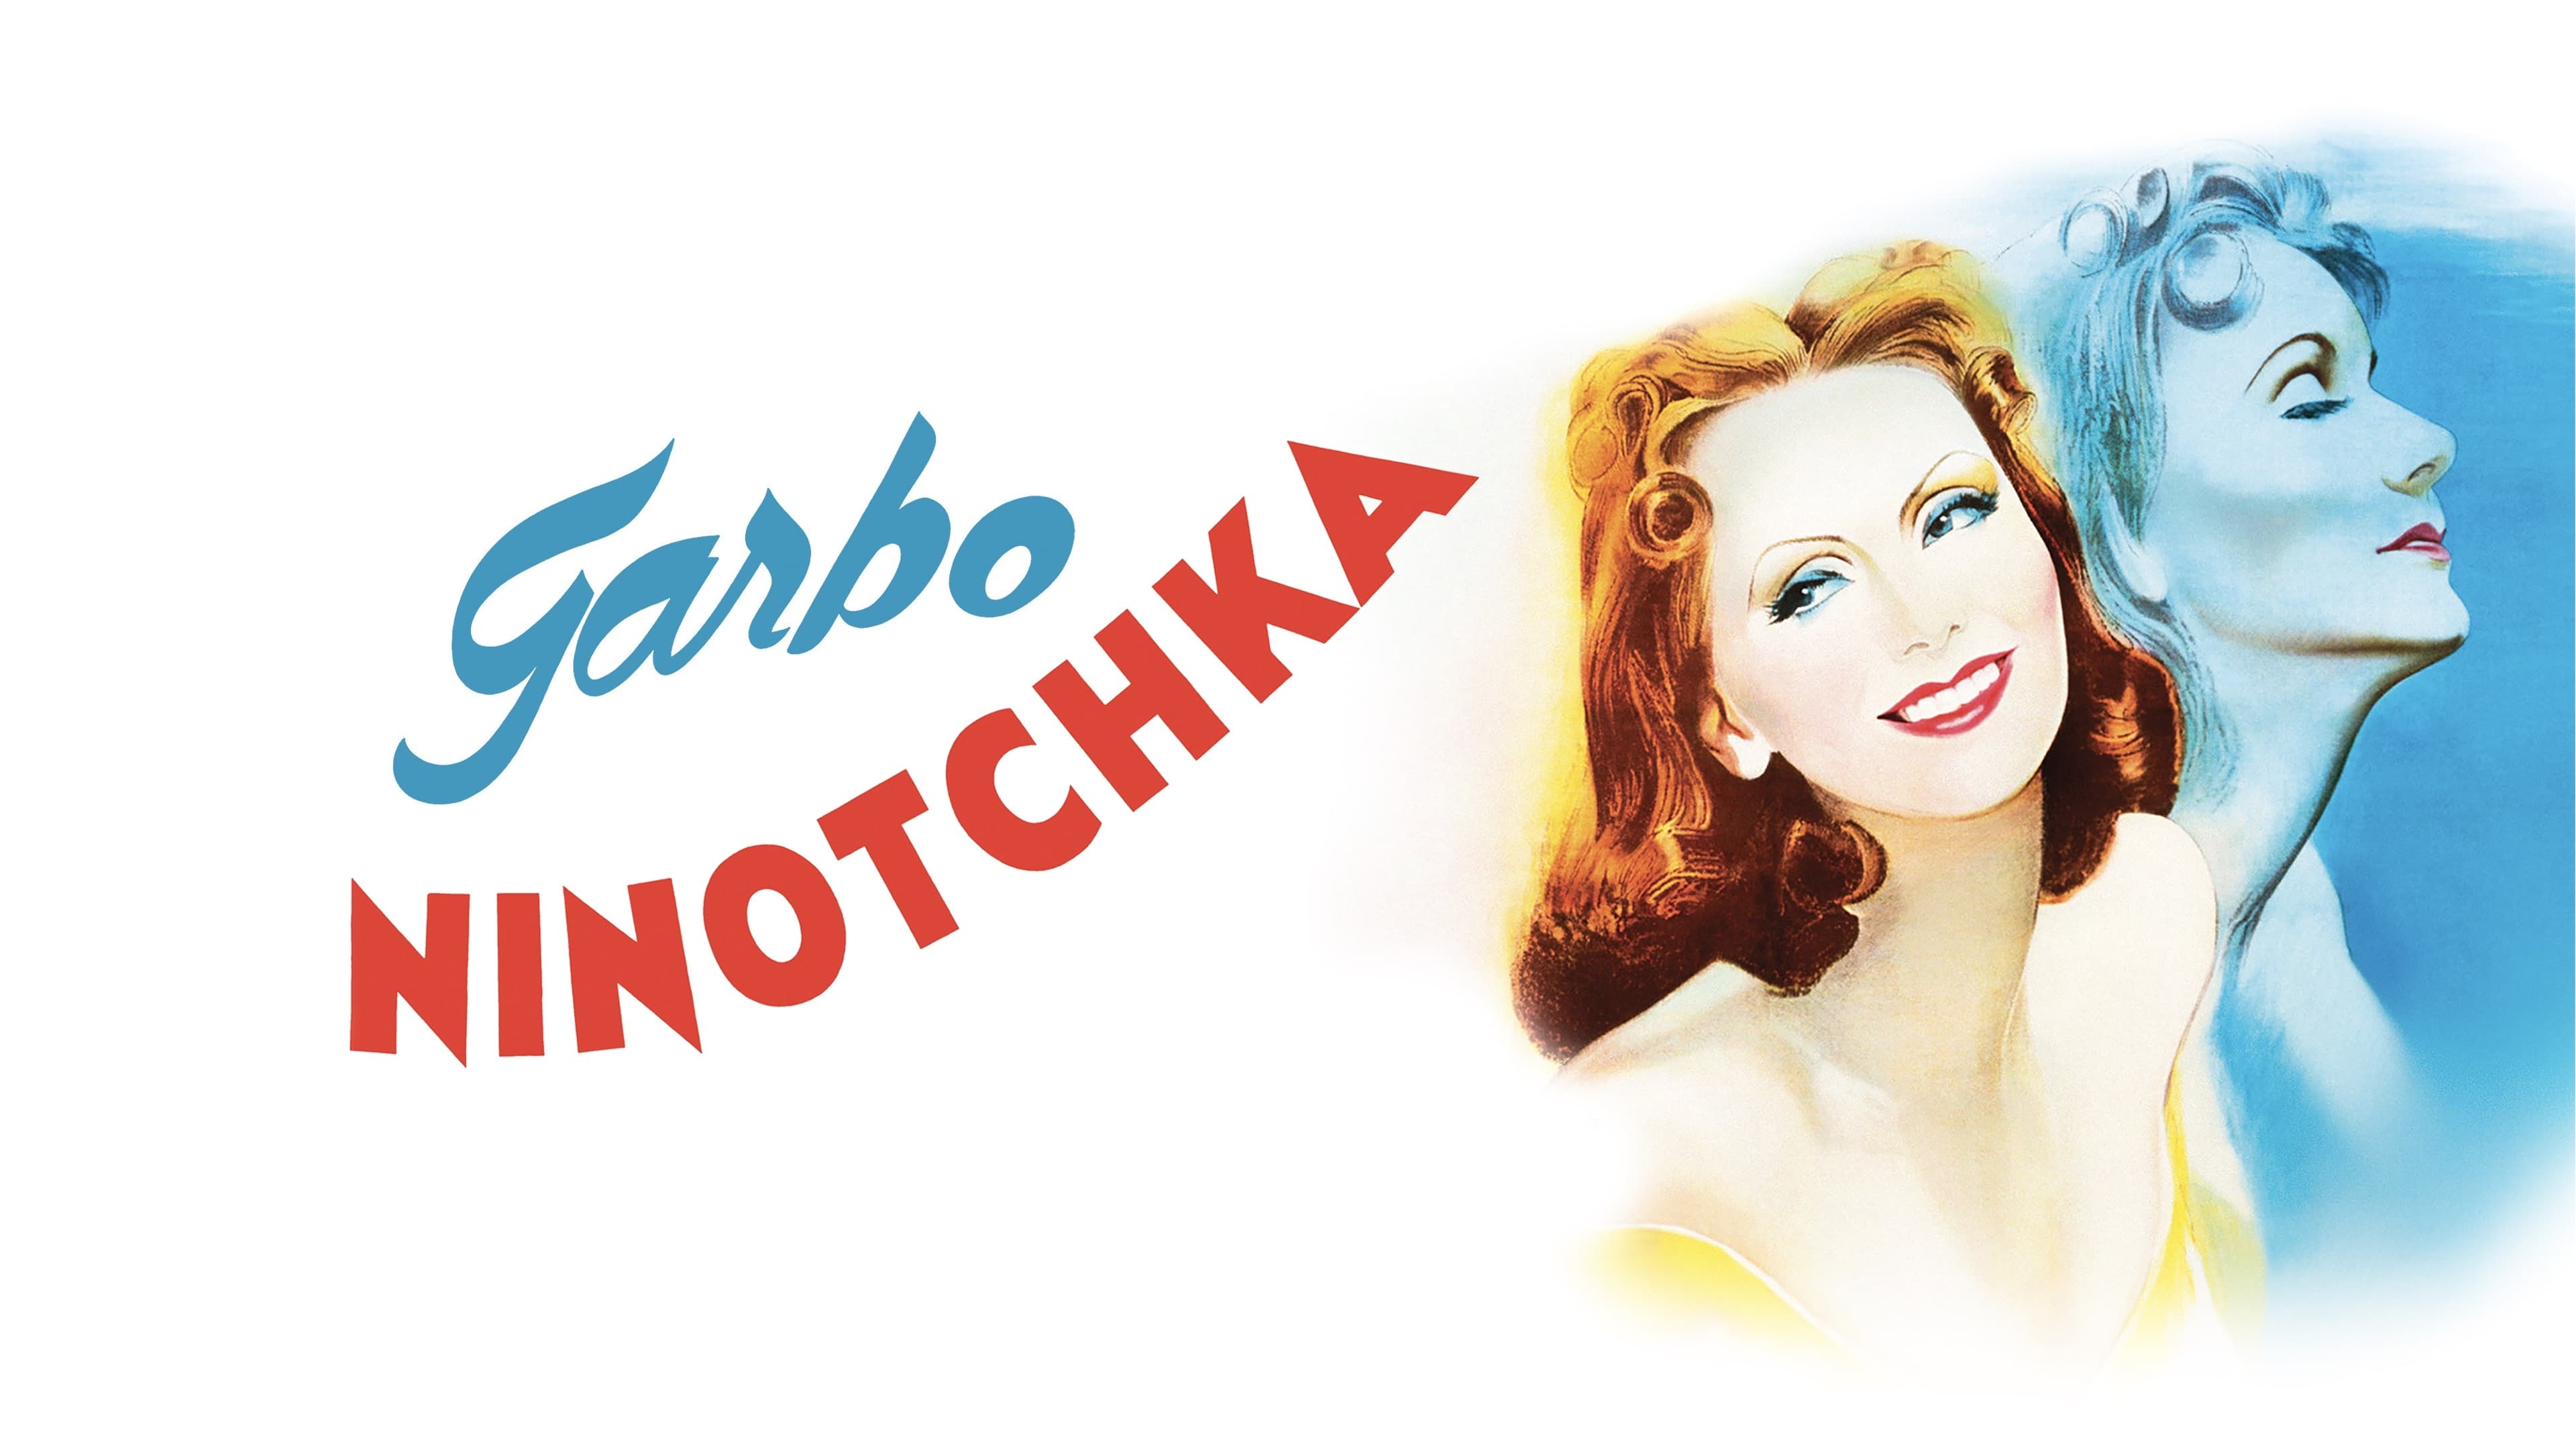 Image du film Ninotchka xdpsrqd9srlsecmr3ebhcx6q0pgjpg